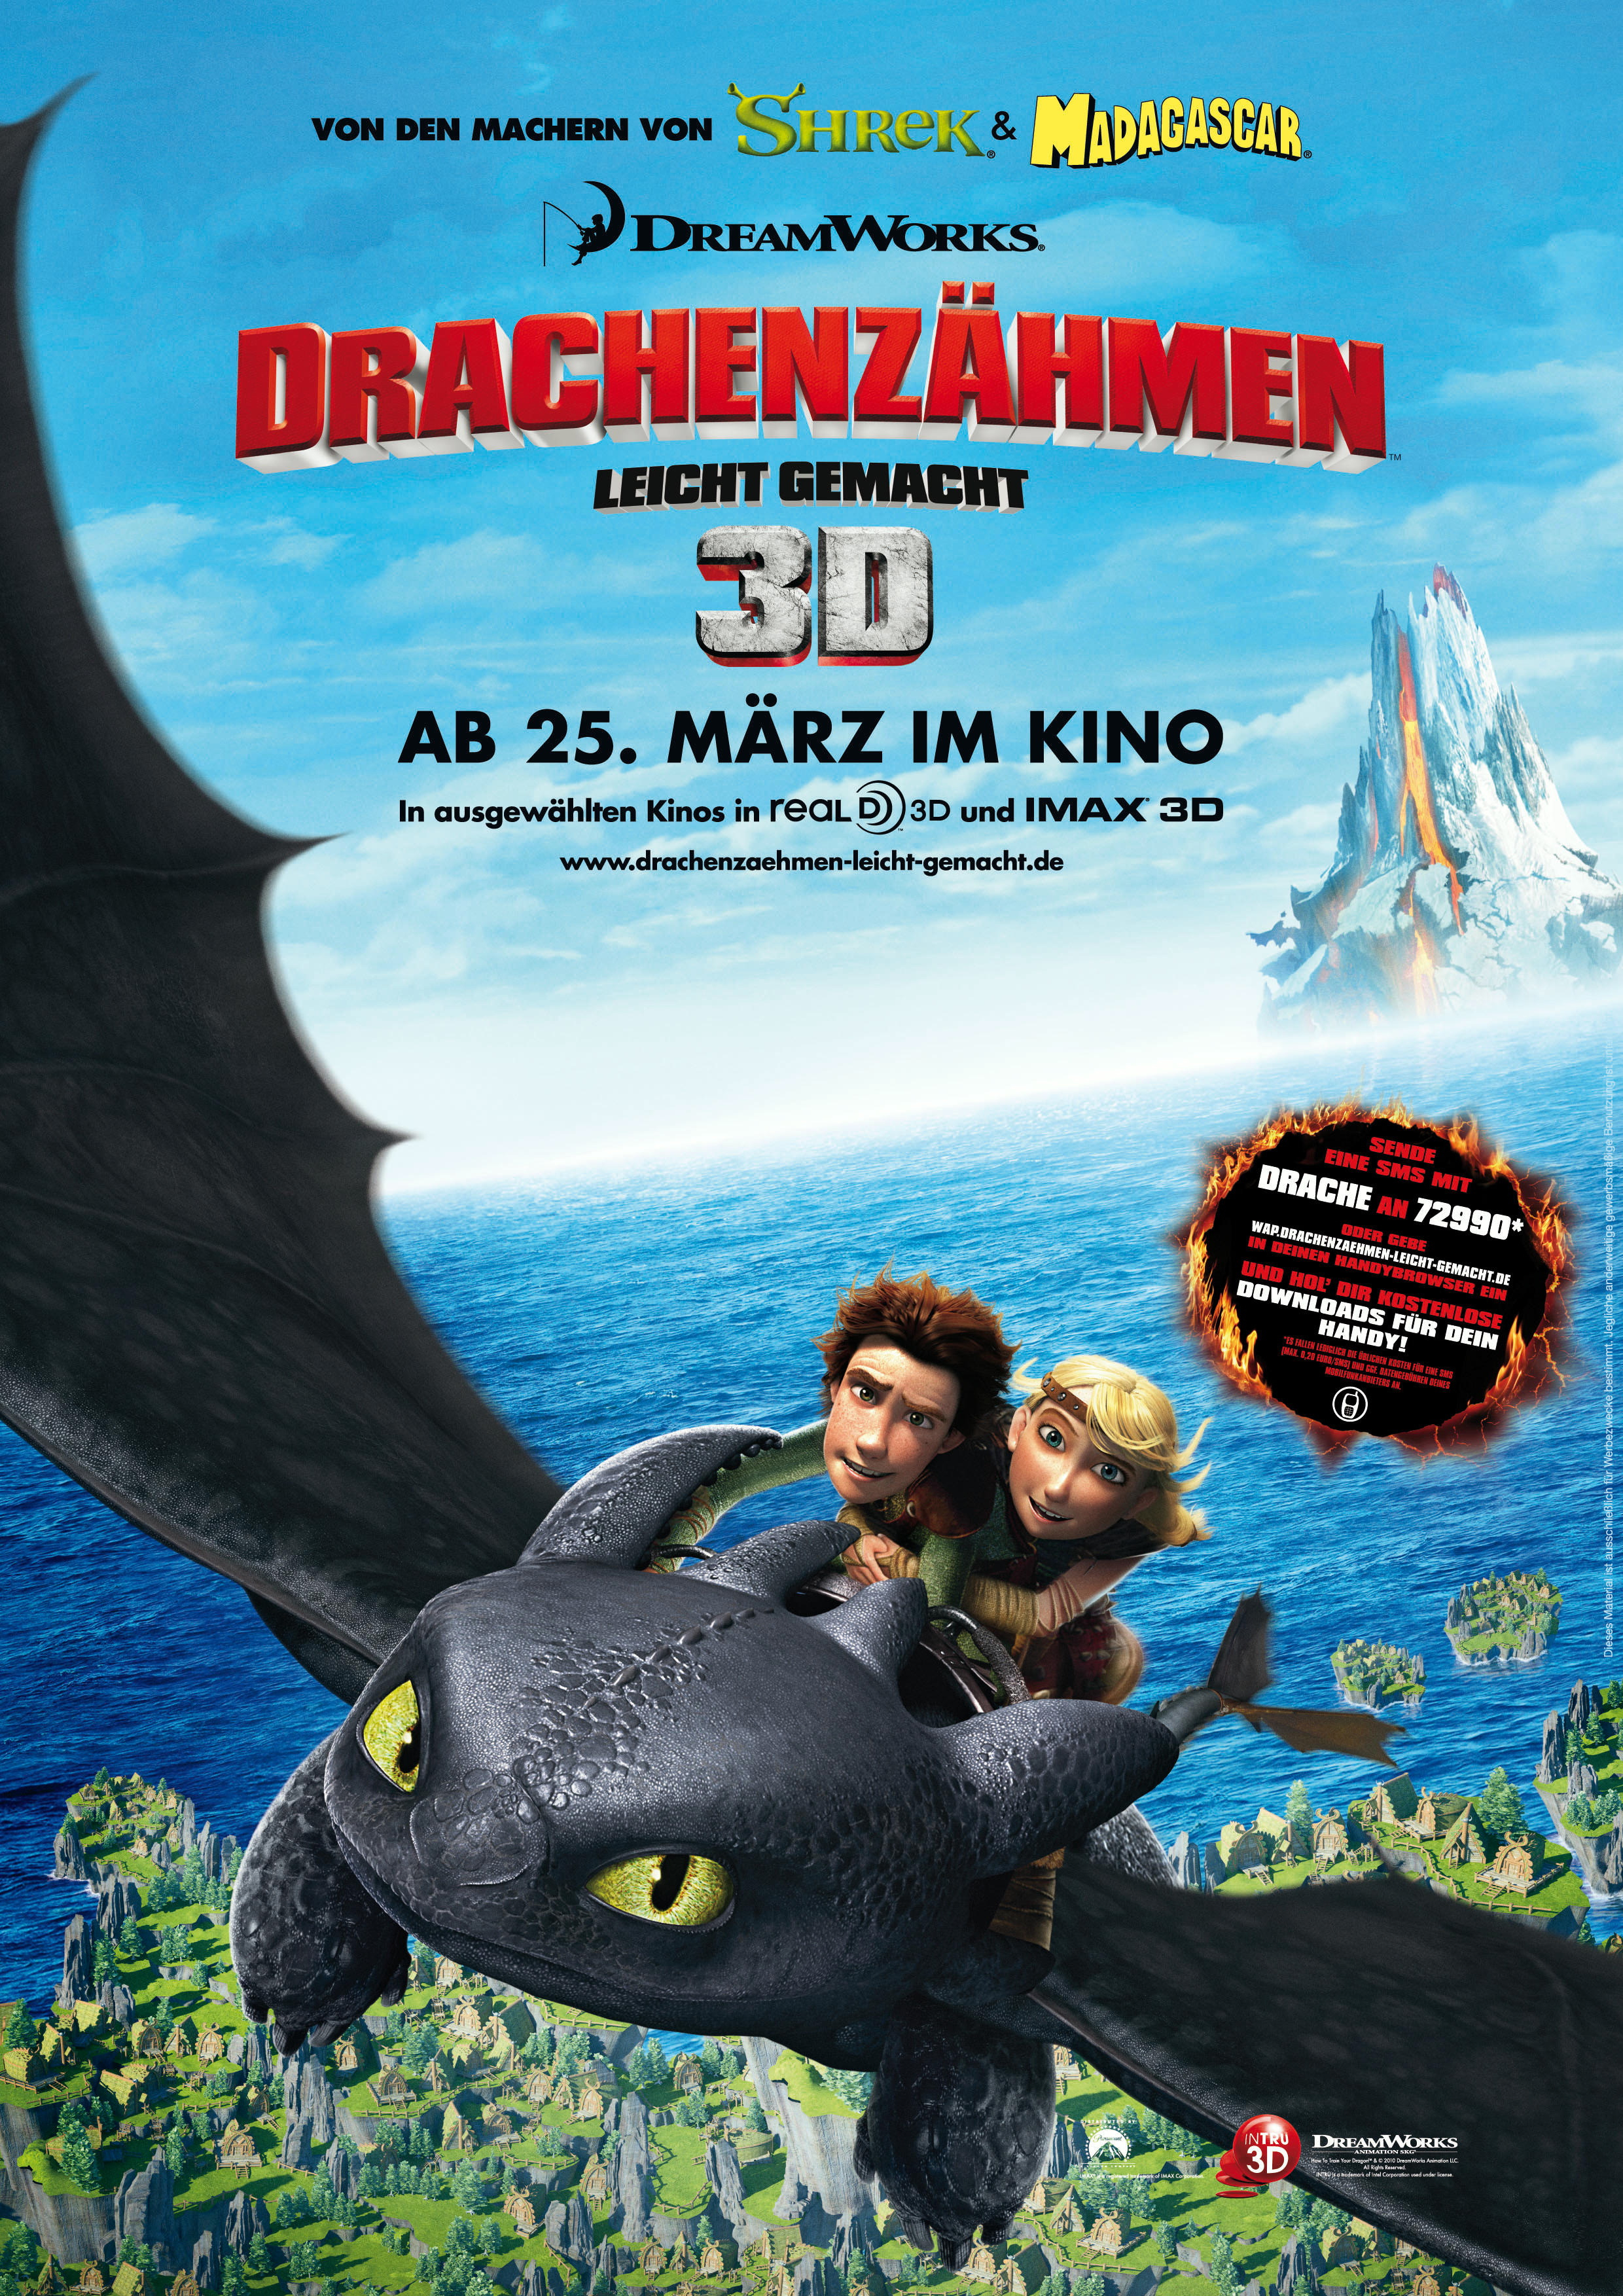 Drachenzähmen Leicht Gemacht Film (2010) · Trailer · Kritik pour Film D Animation Dreamworks